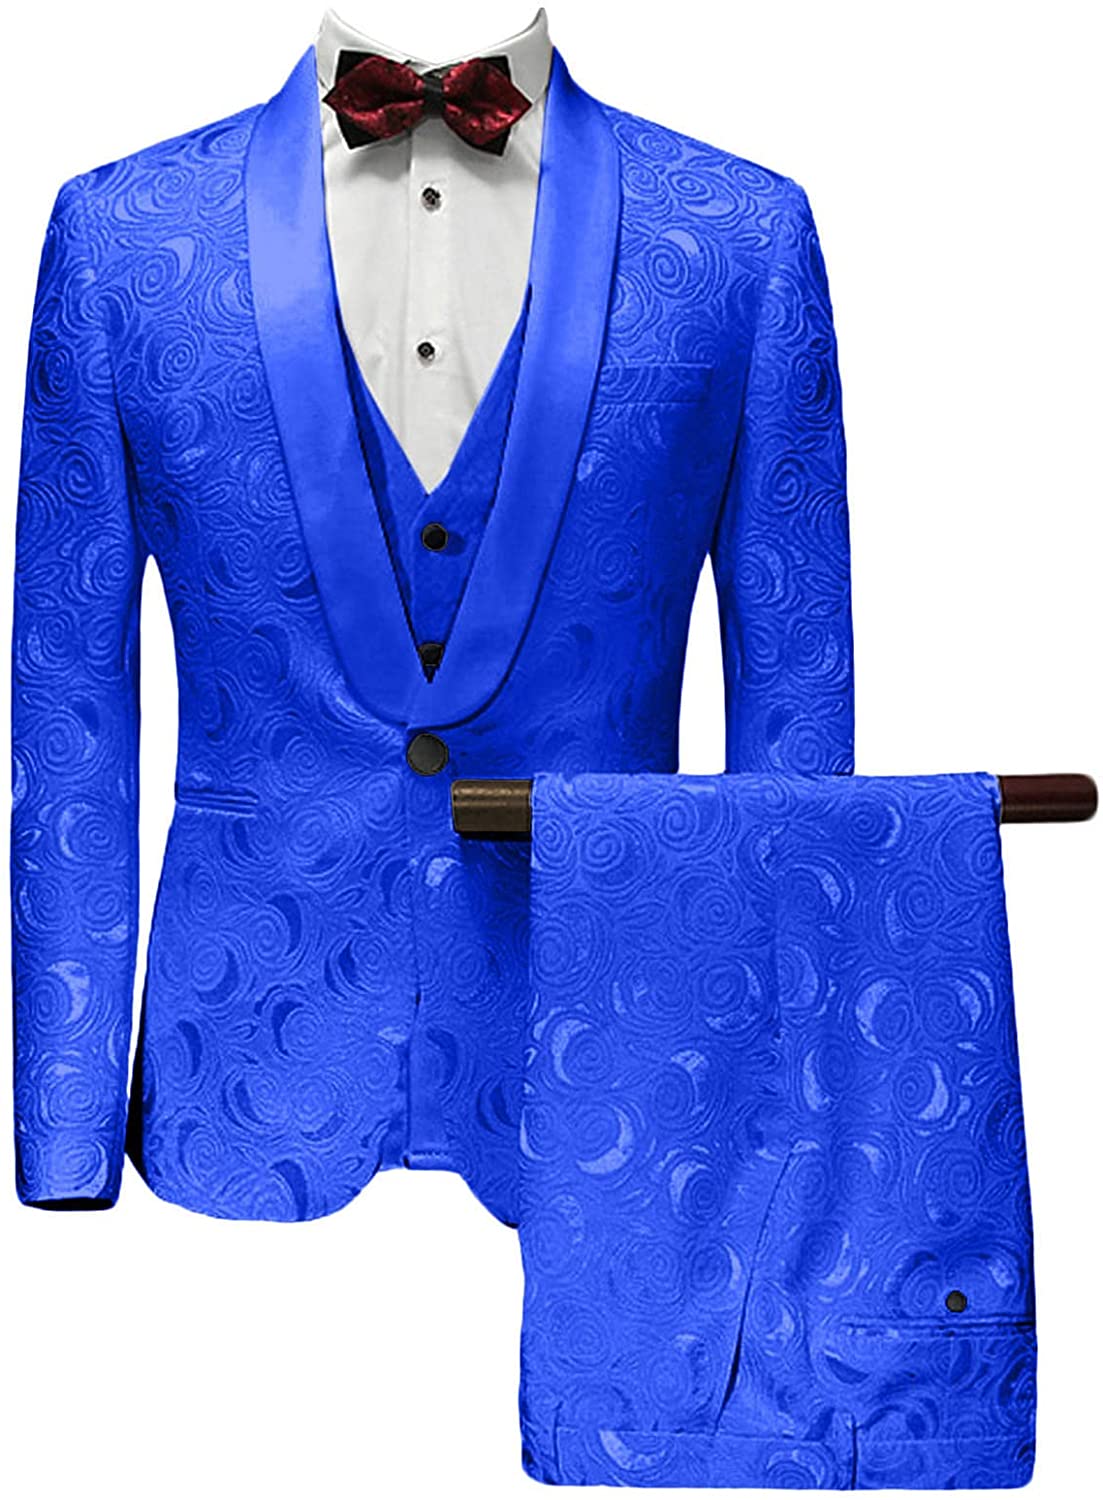 Wemaliyzd Mens 3 Pieces Jacquard Wedding Suit Classic Fit Blazer Vest Pants